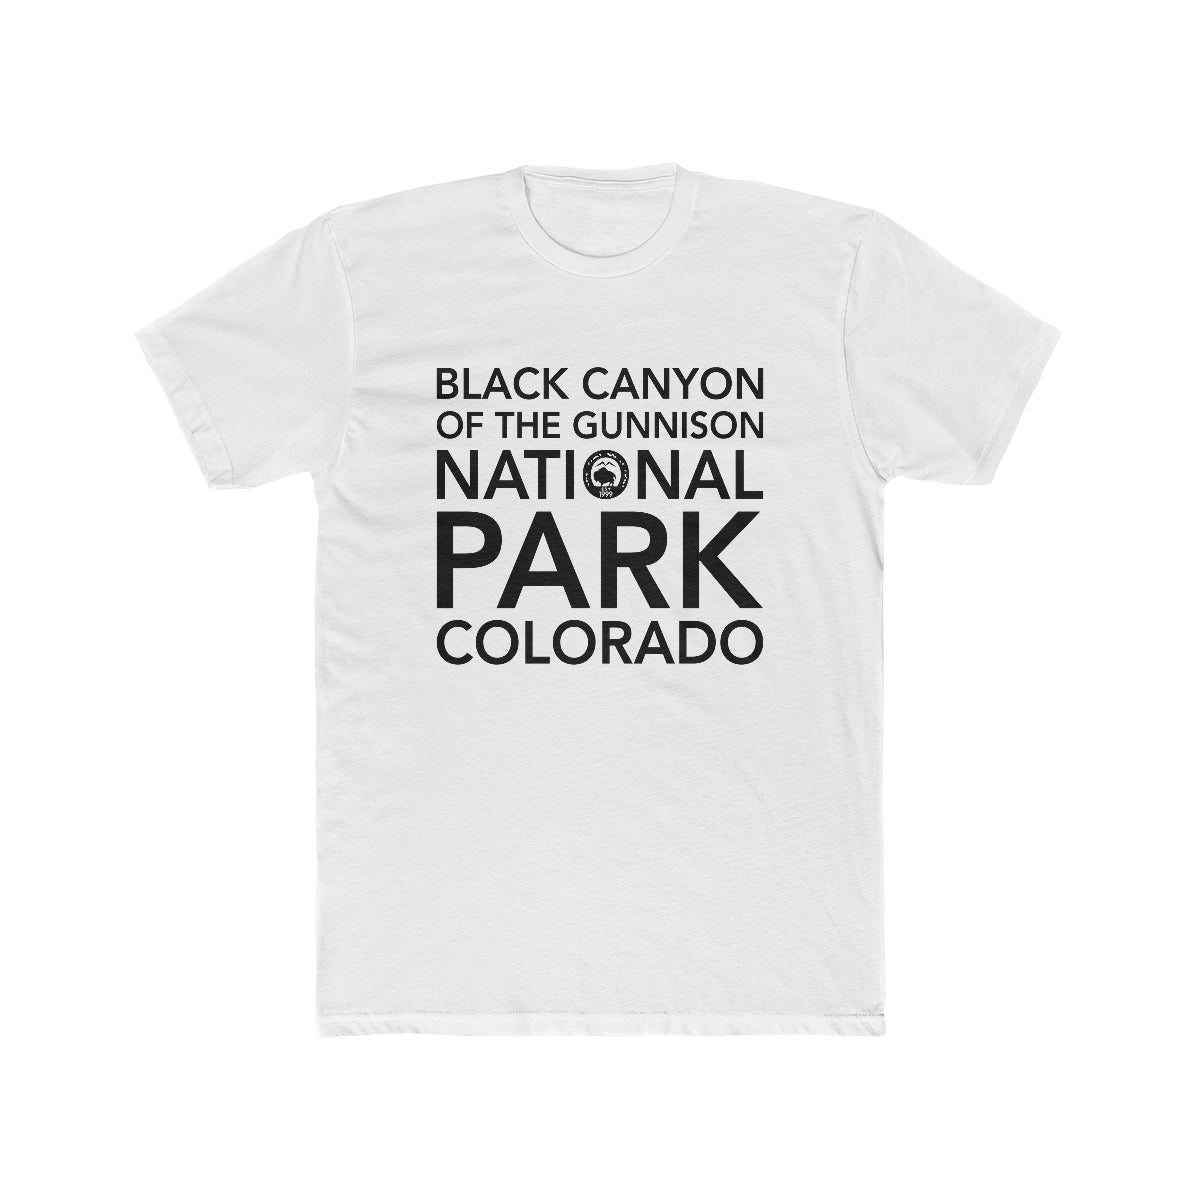 Black Canyon of the Gunnison National Park T-Shirt Block Text